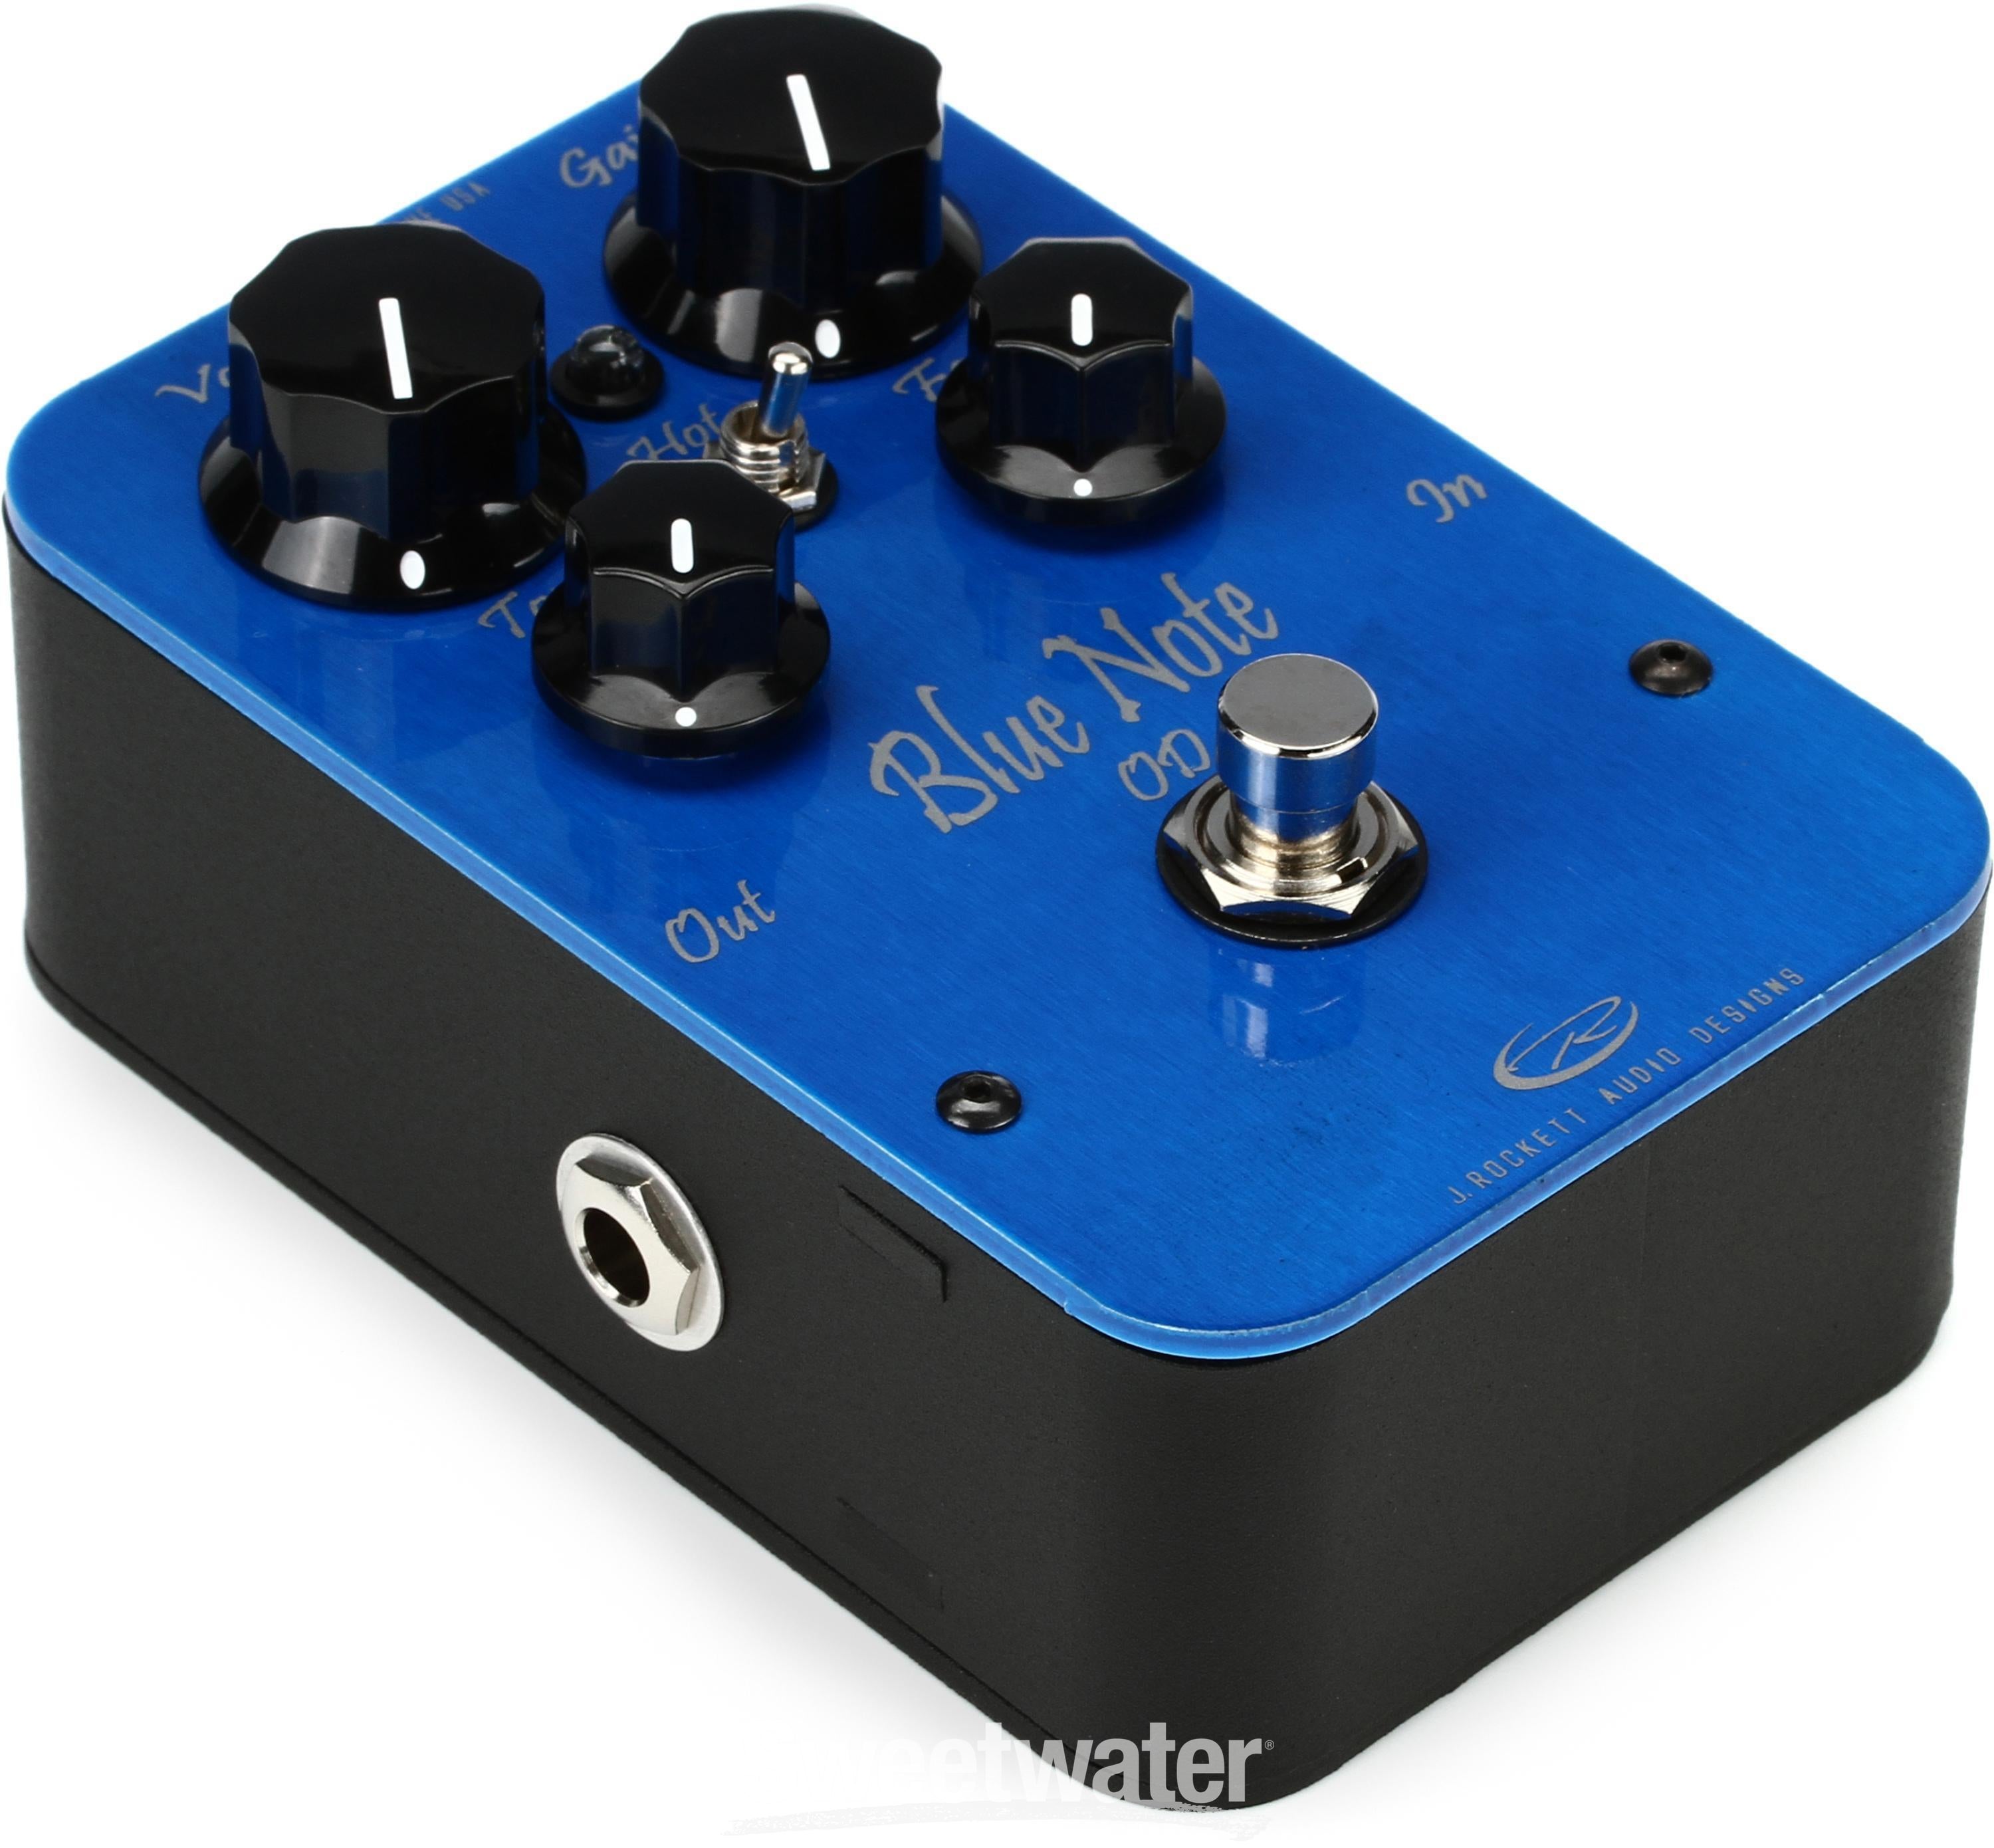 J. Rockett Audio Designs Blue Note OD (Pro Series) Boost/Overdrive Pedal